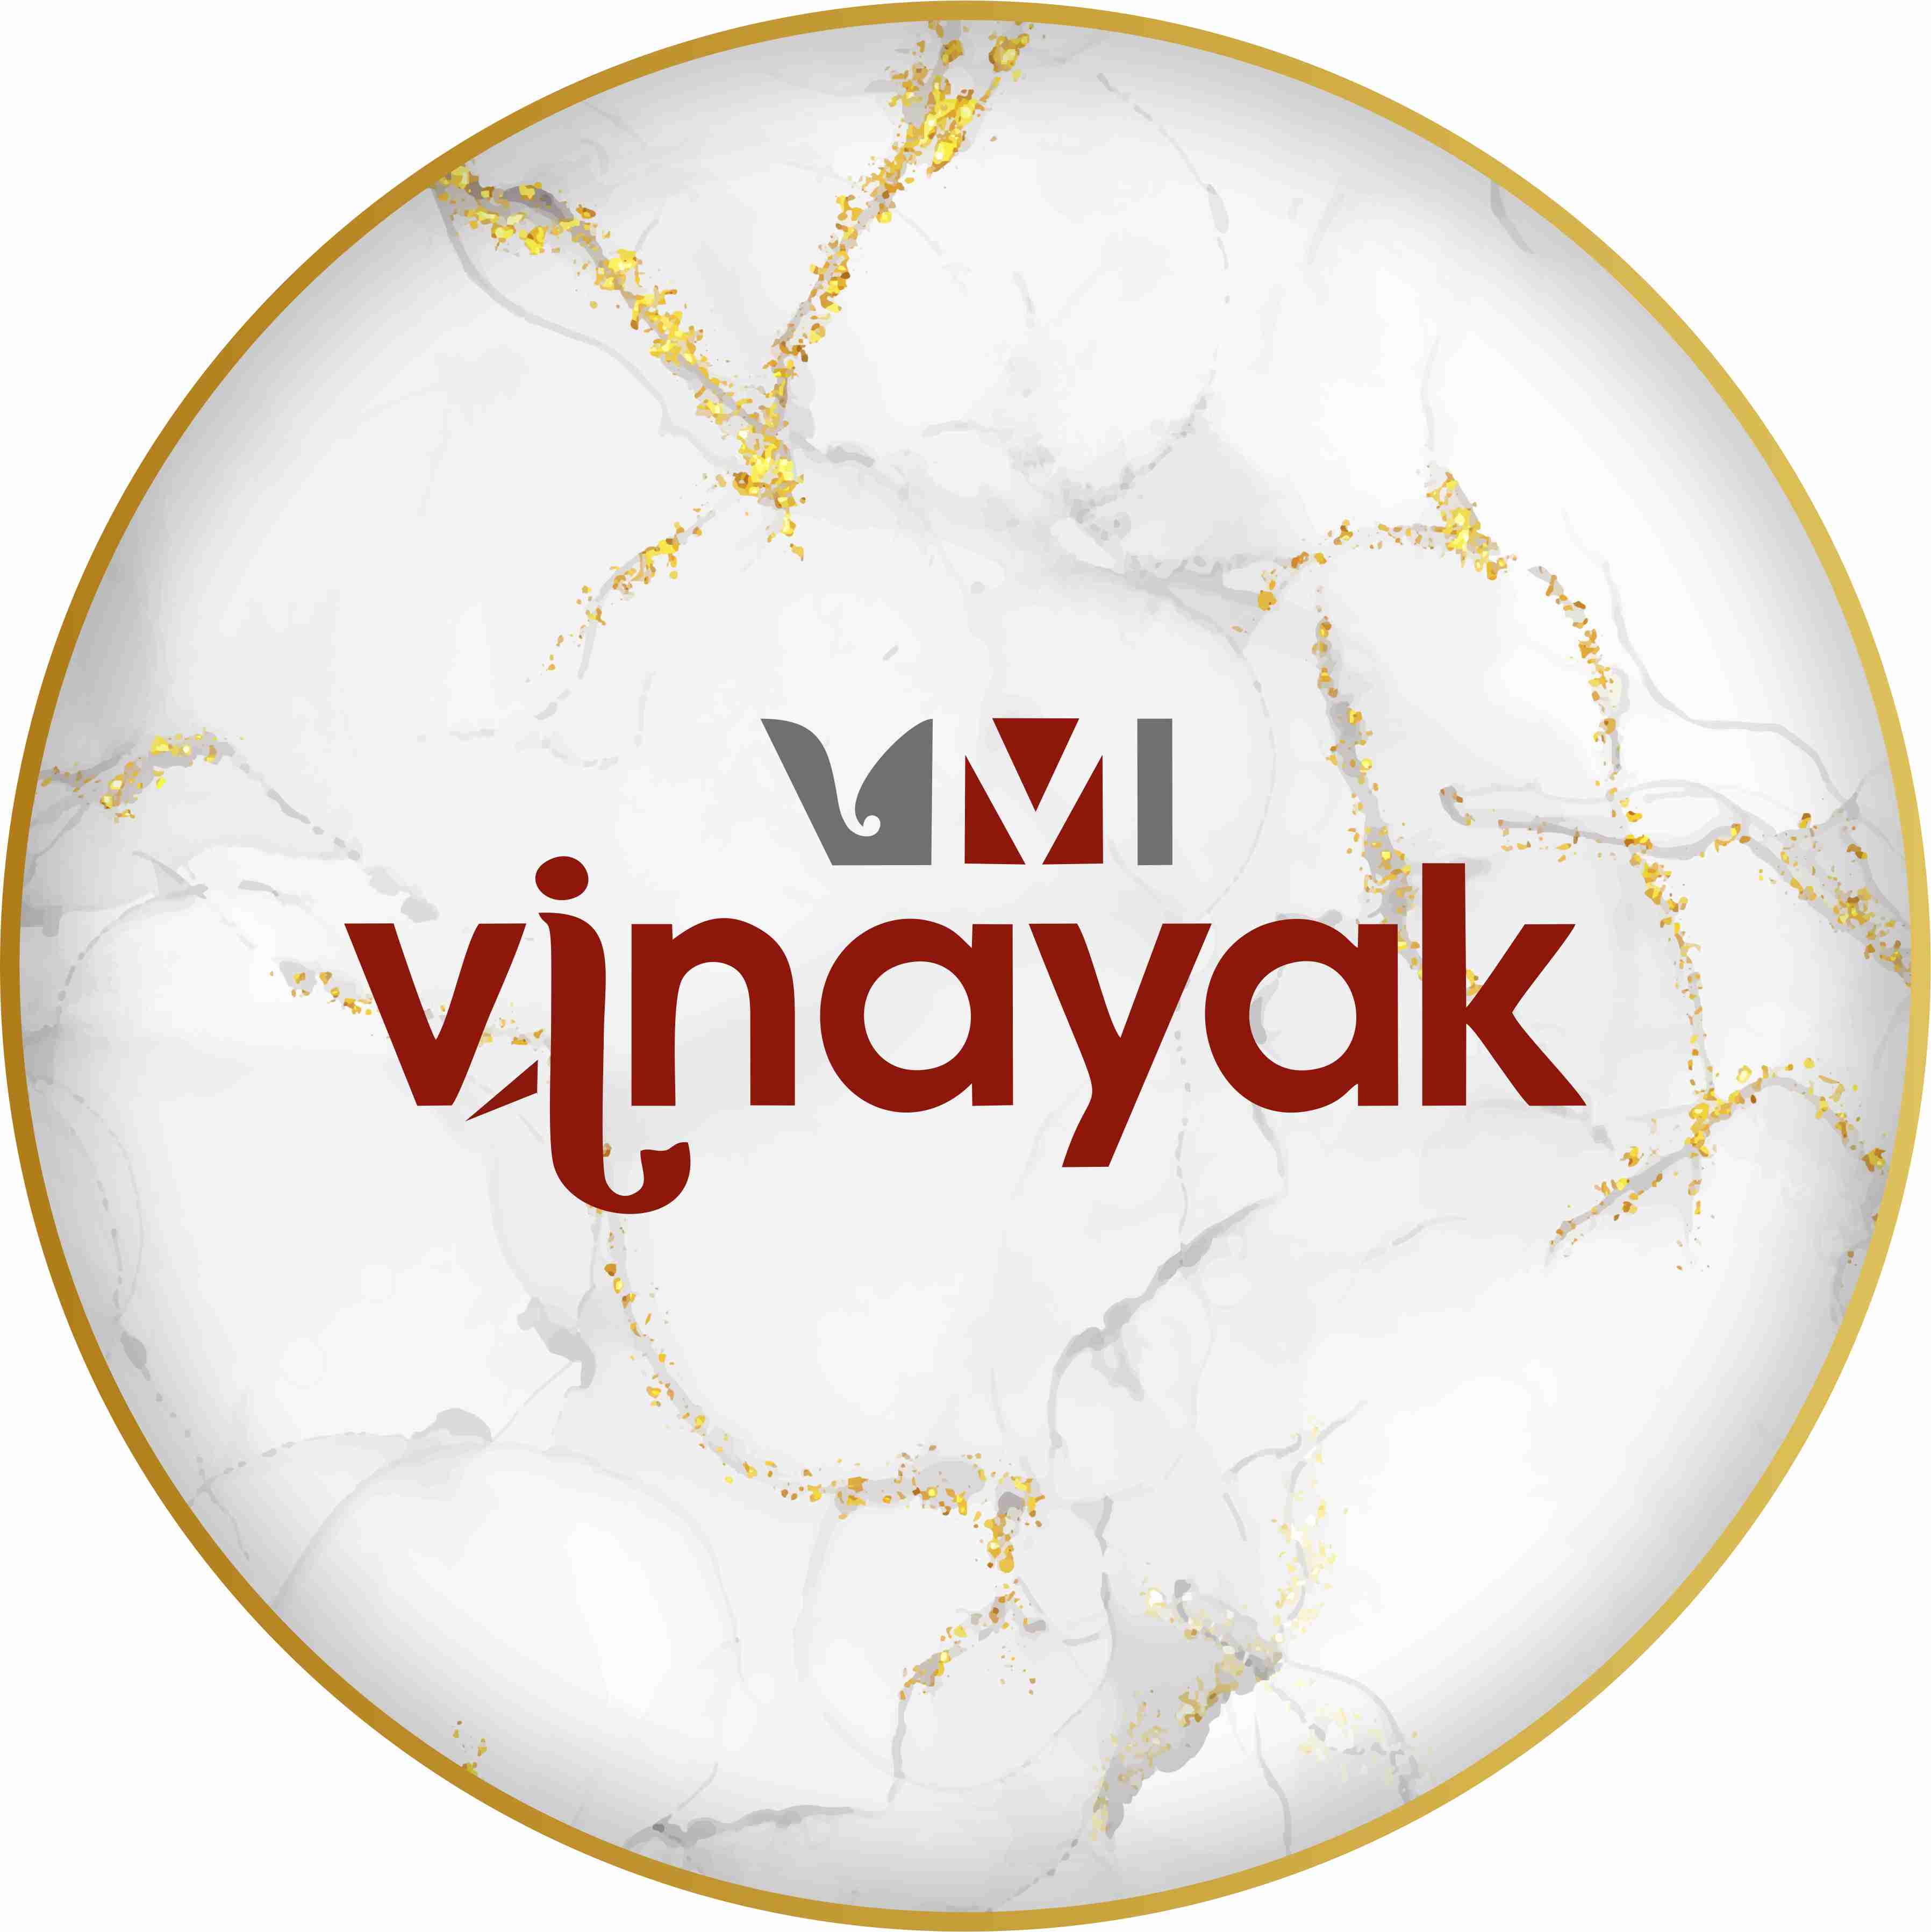 Vinayak Marmo International Profile Picture